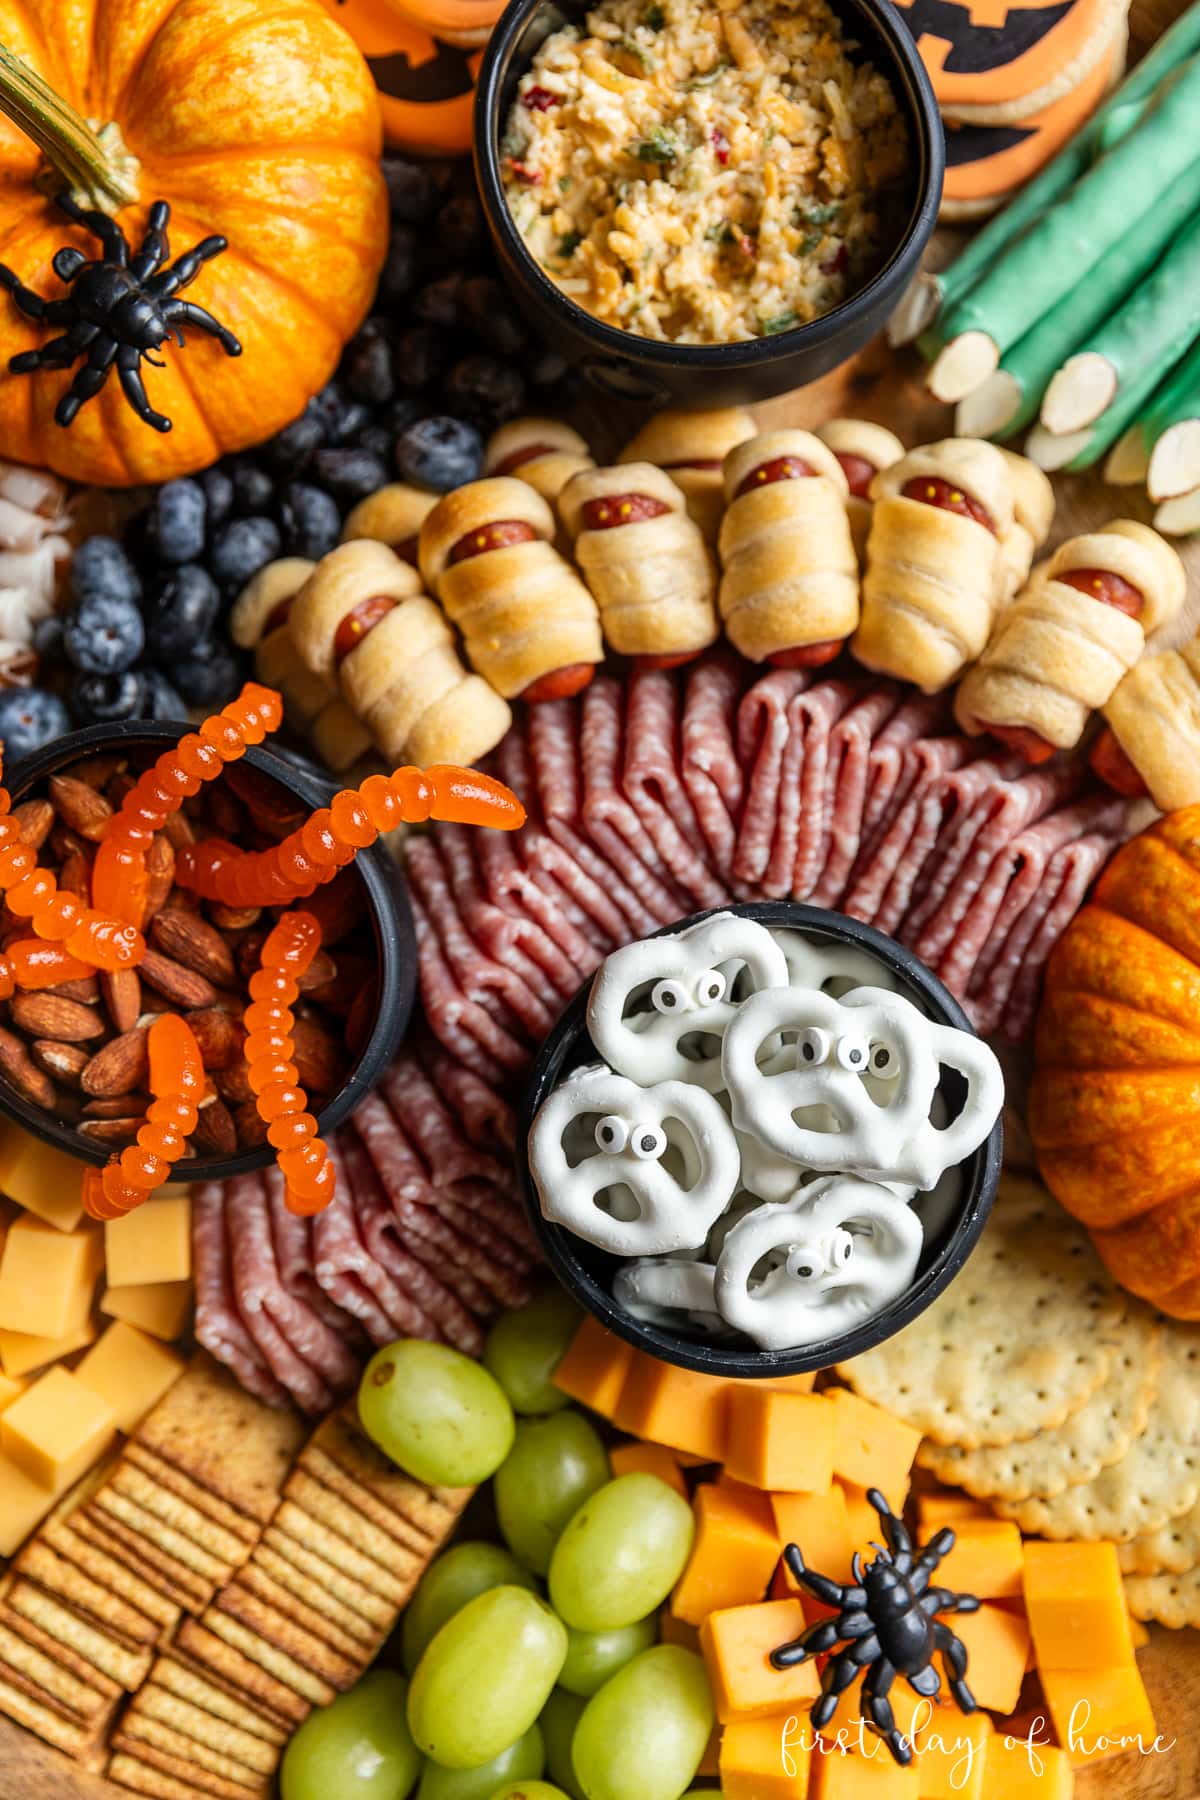 Yogurt mummy pretzel twists, salami, mummy dogs, cheese, crackers, and fruit on Halloween charcuterie board. 